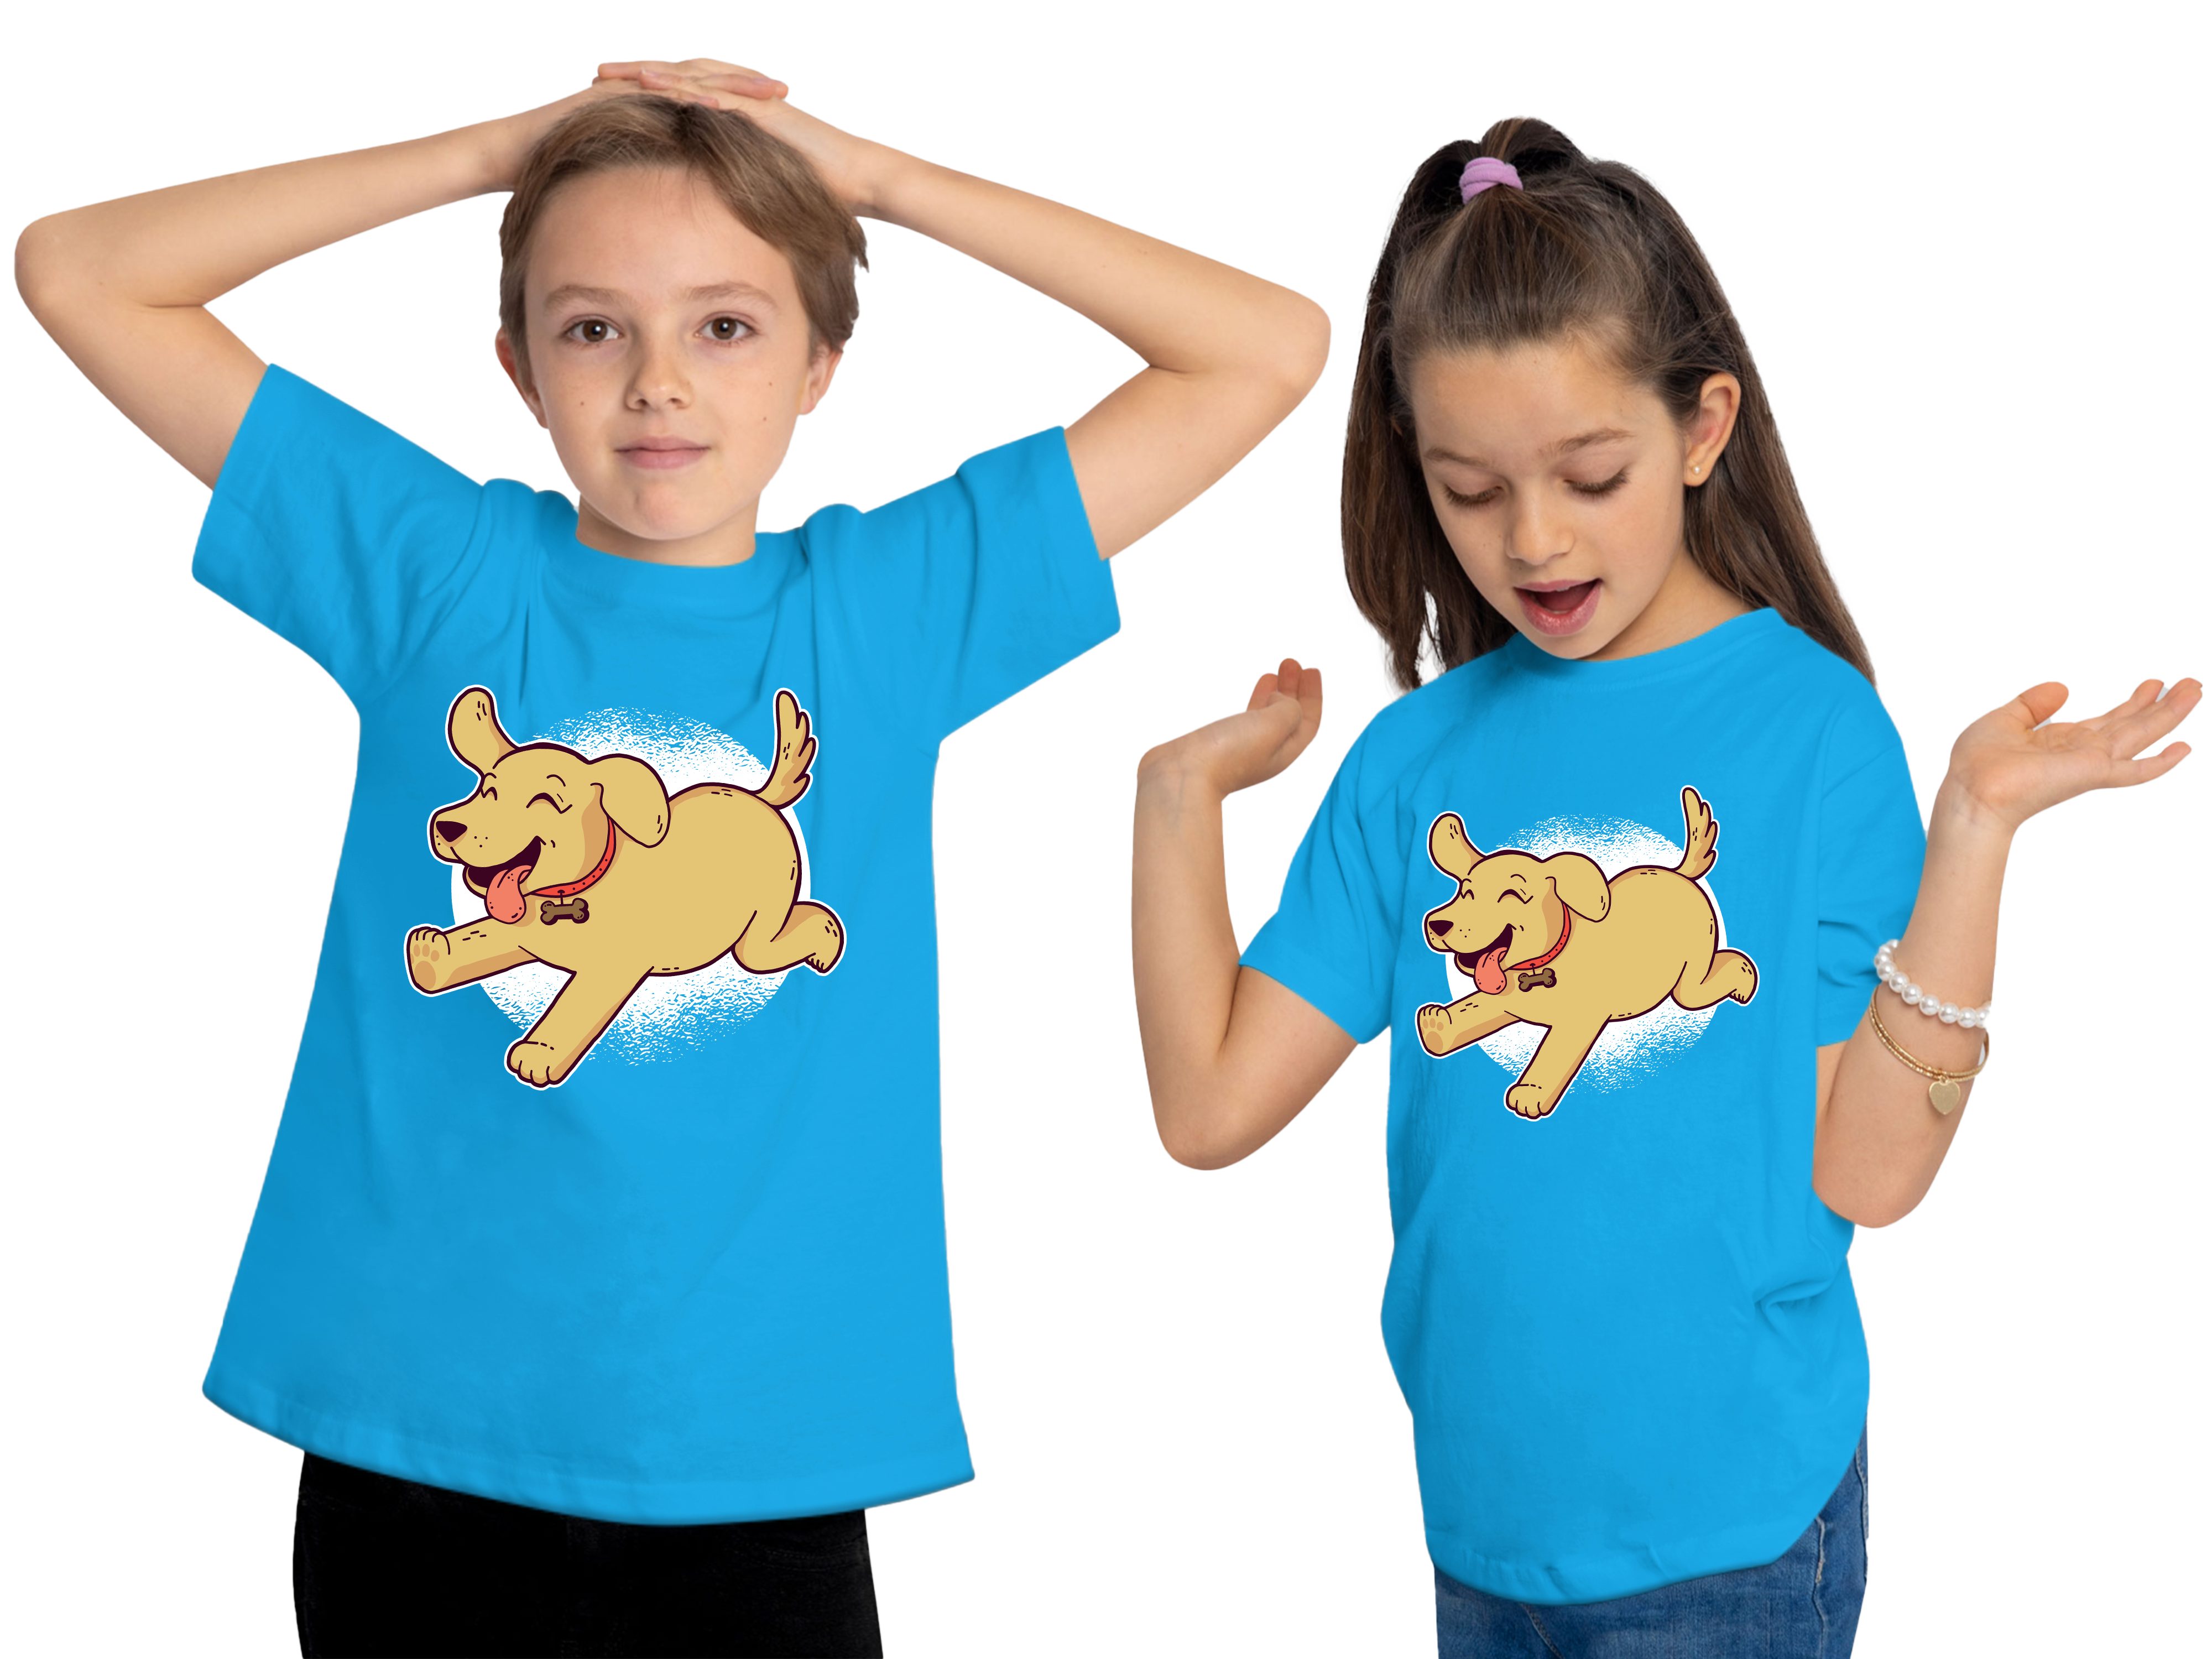 aqua Hunde T-Shirt Kinder bedruckt MyDesign24 Shirt Aufdruck, mit Spielender Labrador i248 blau Welpe - Print Baumwollshirt